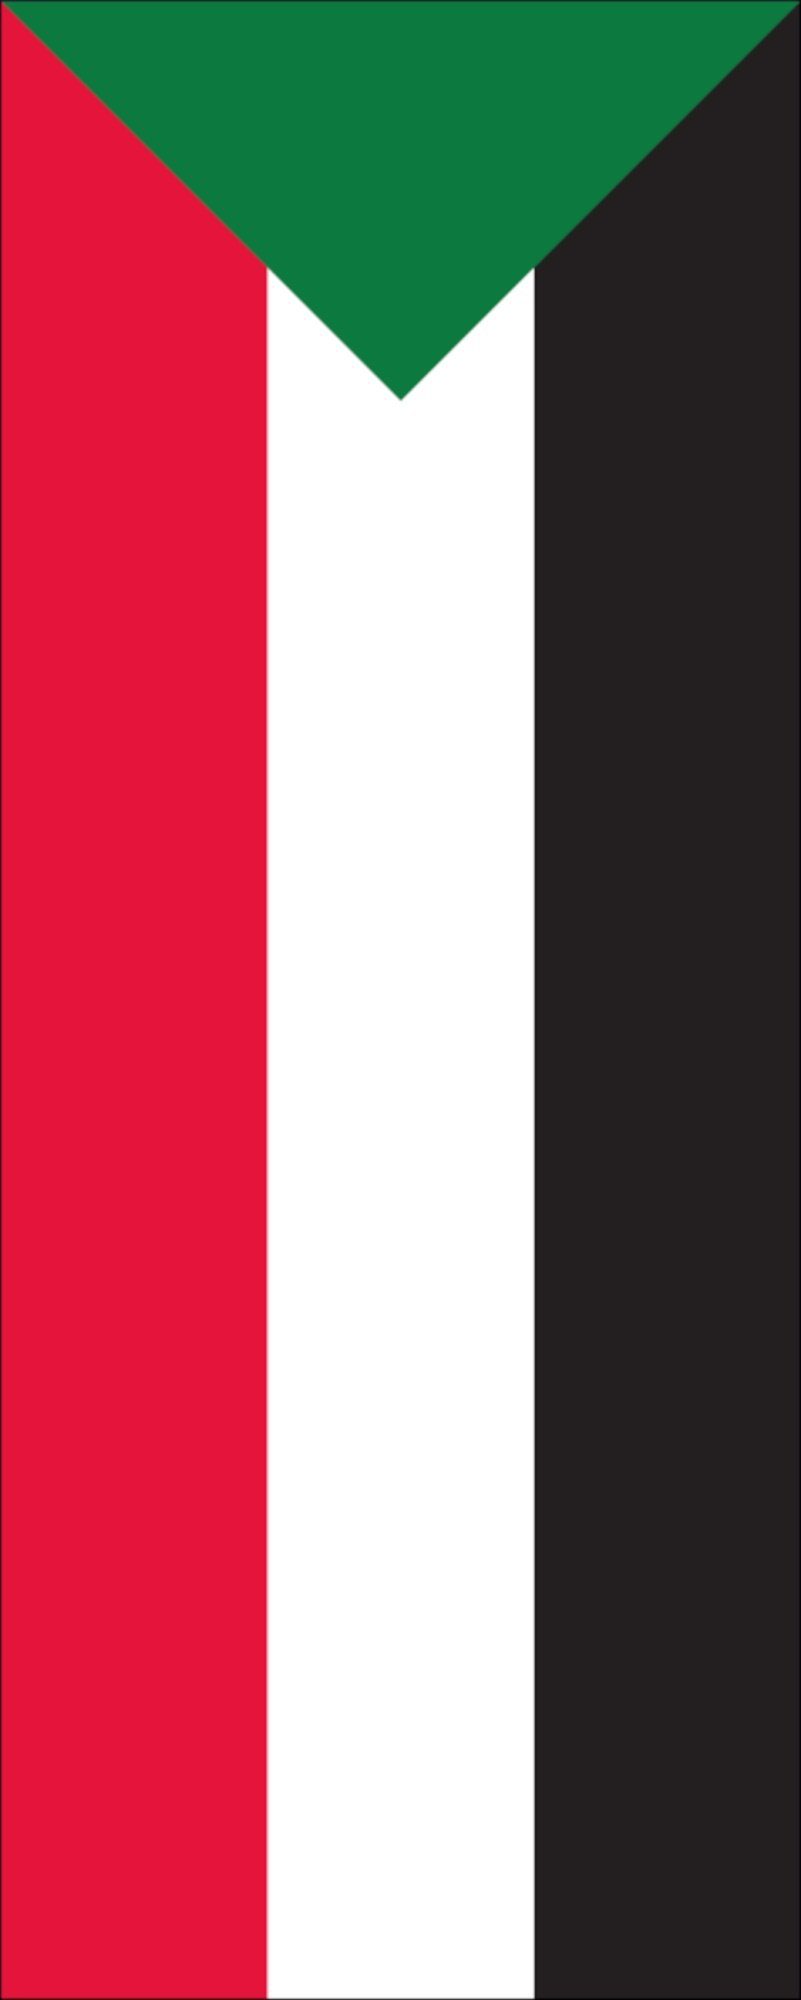 g/m² Hochformat Flagge Sudan flaggenmeer 110 Flagge